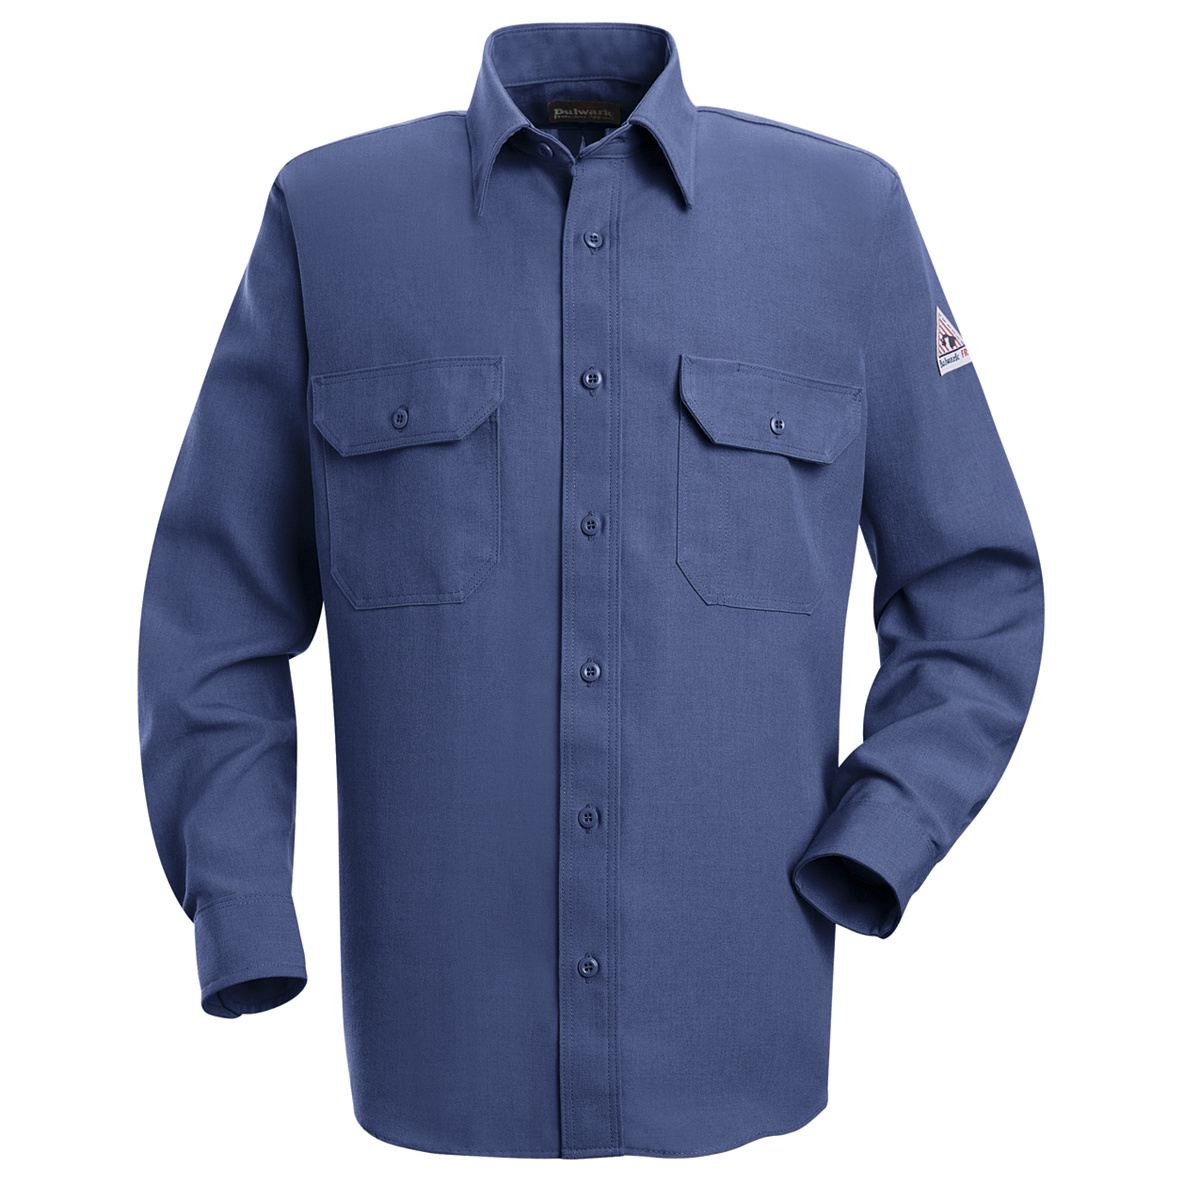 Bulwark® 3X Tall Gulf Blue Nomex® IIIA/Nomex® Aramid/Kevlar® Aramid Flame Resistant Uniform Shirt With Button Front Closure